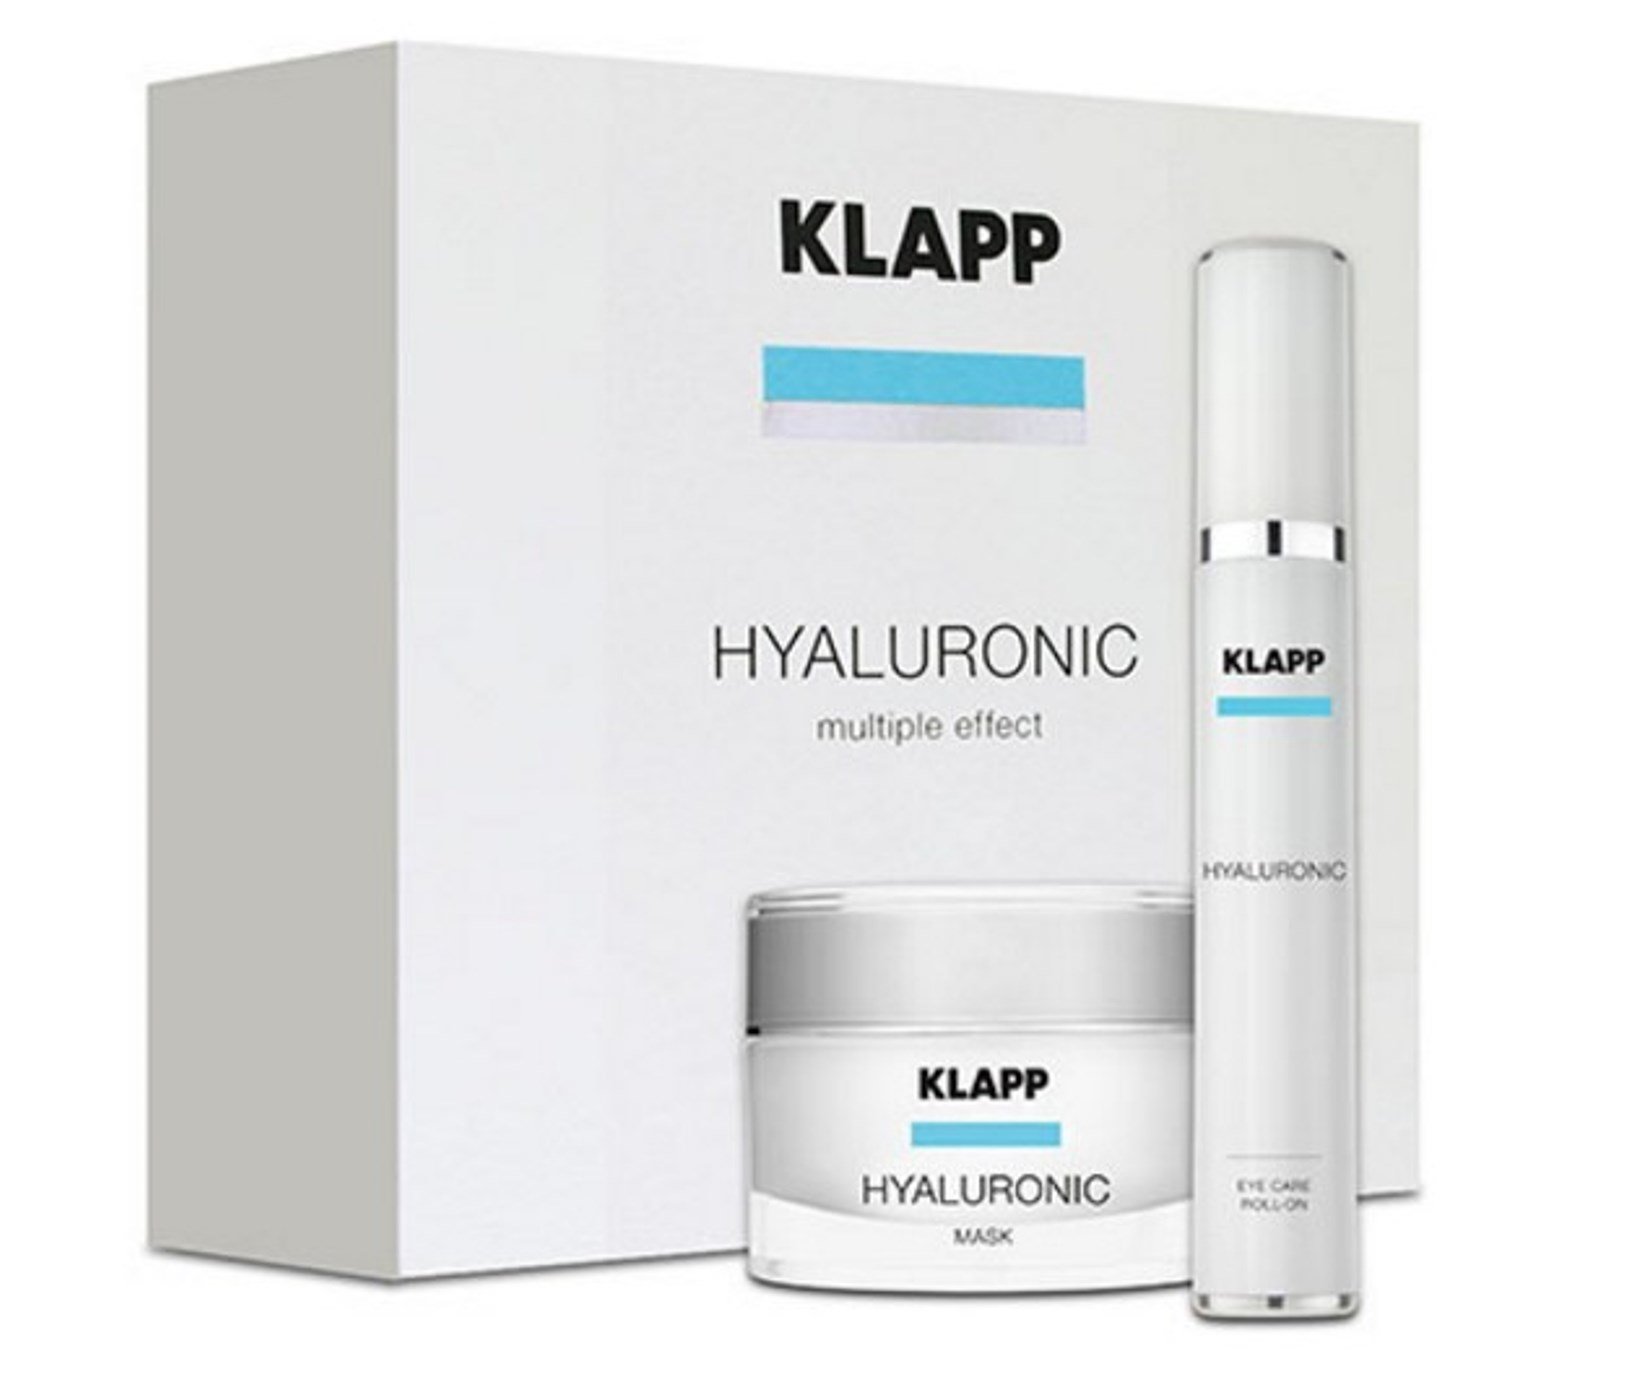 Klapp Hyaluronic Multiple Effect Face Care Set ( Cream 50ml + Serum 50ml ) Get Free Sisley Ssisleya Eye and Lip Contour Cream 2g